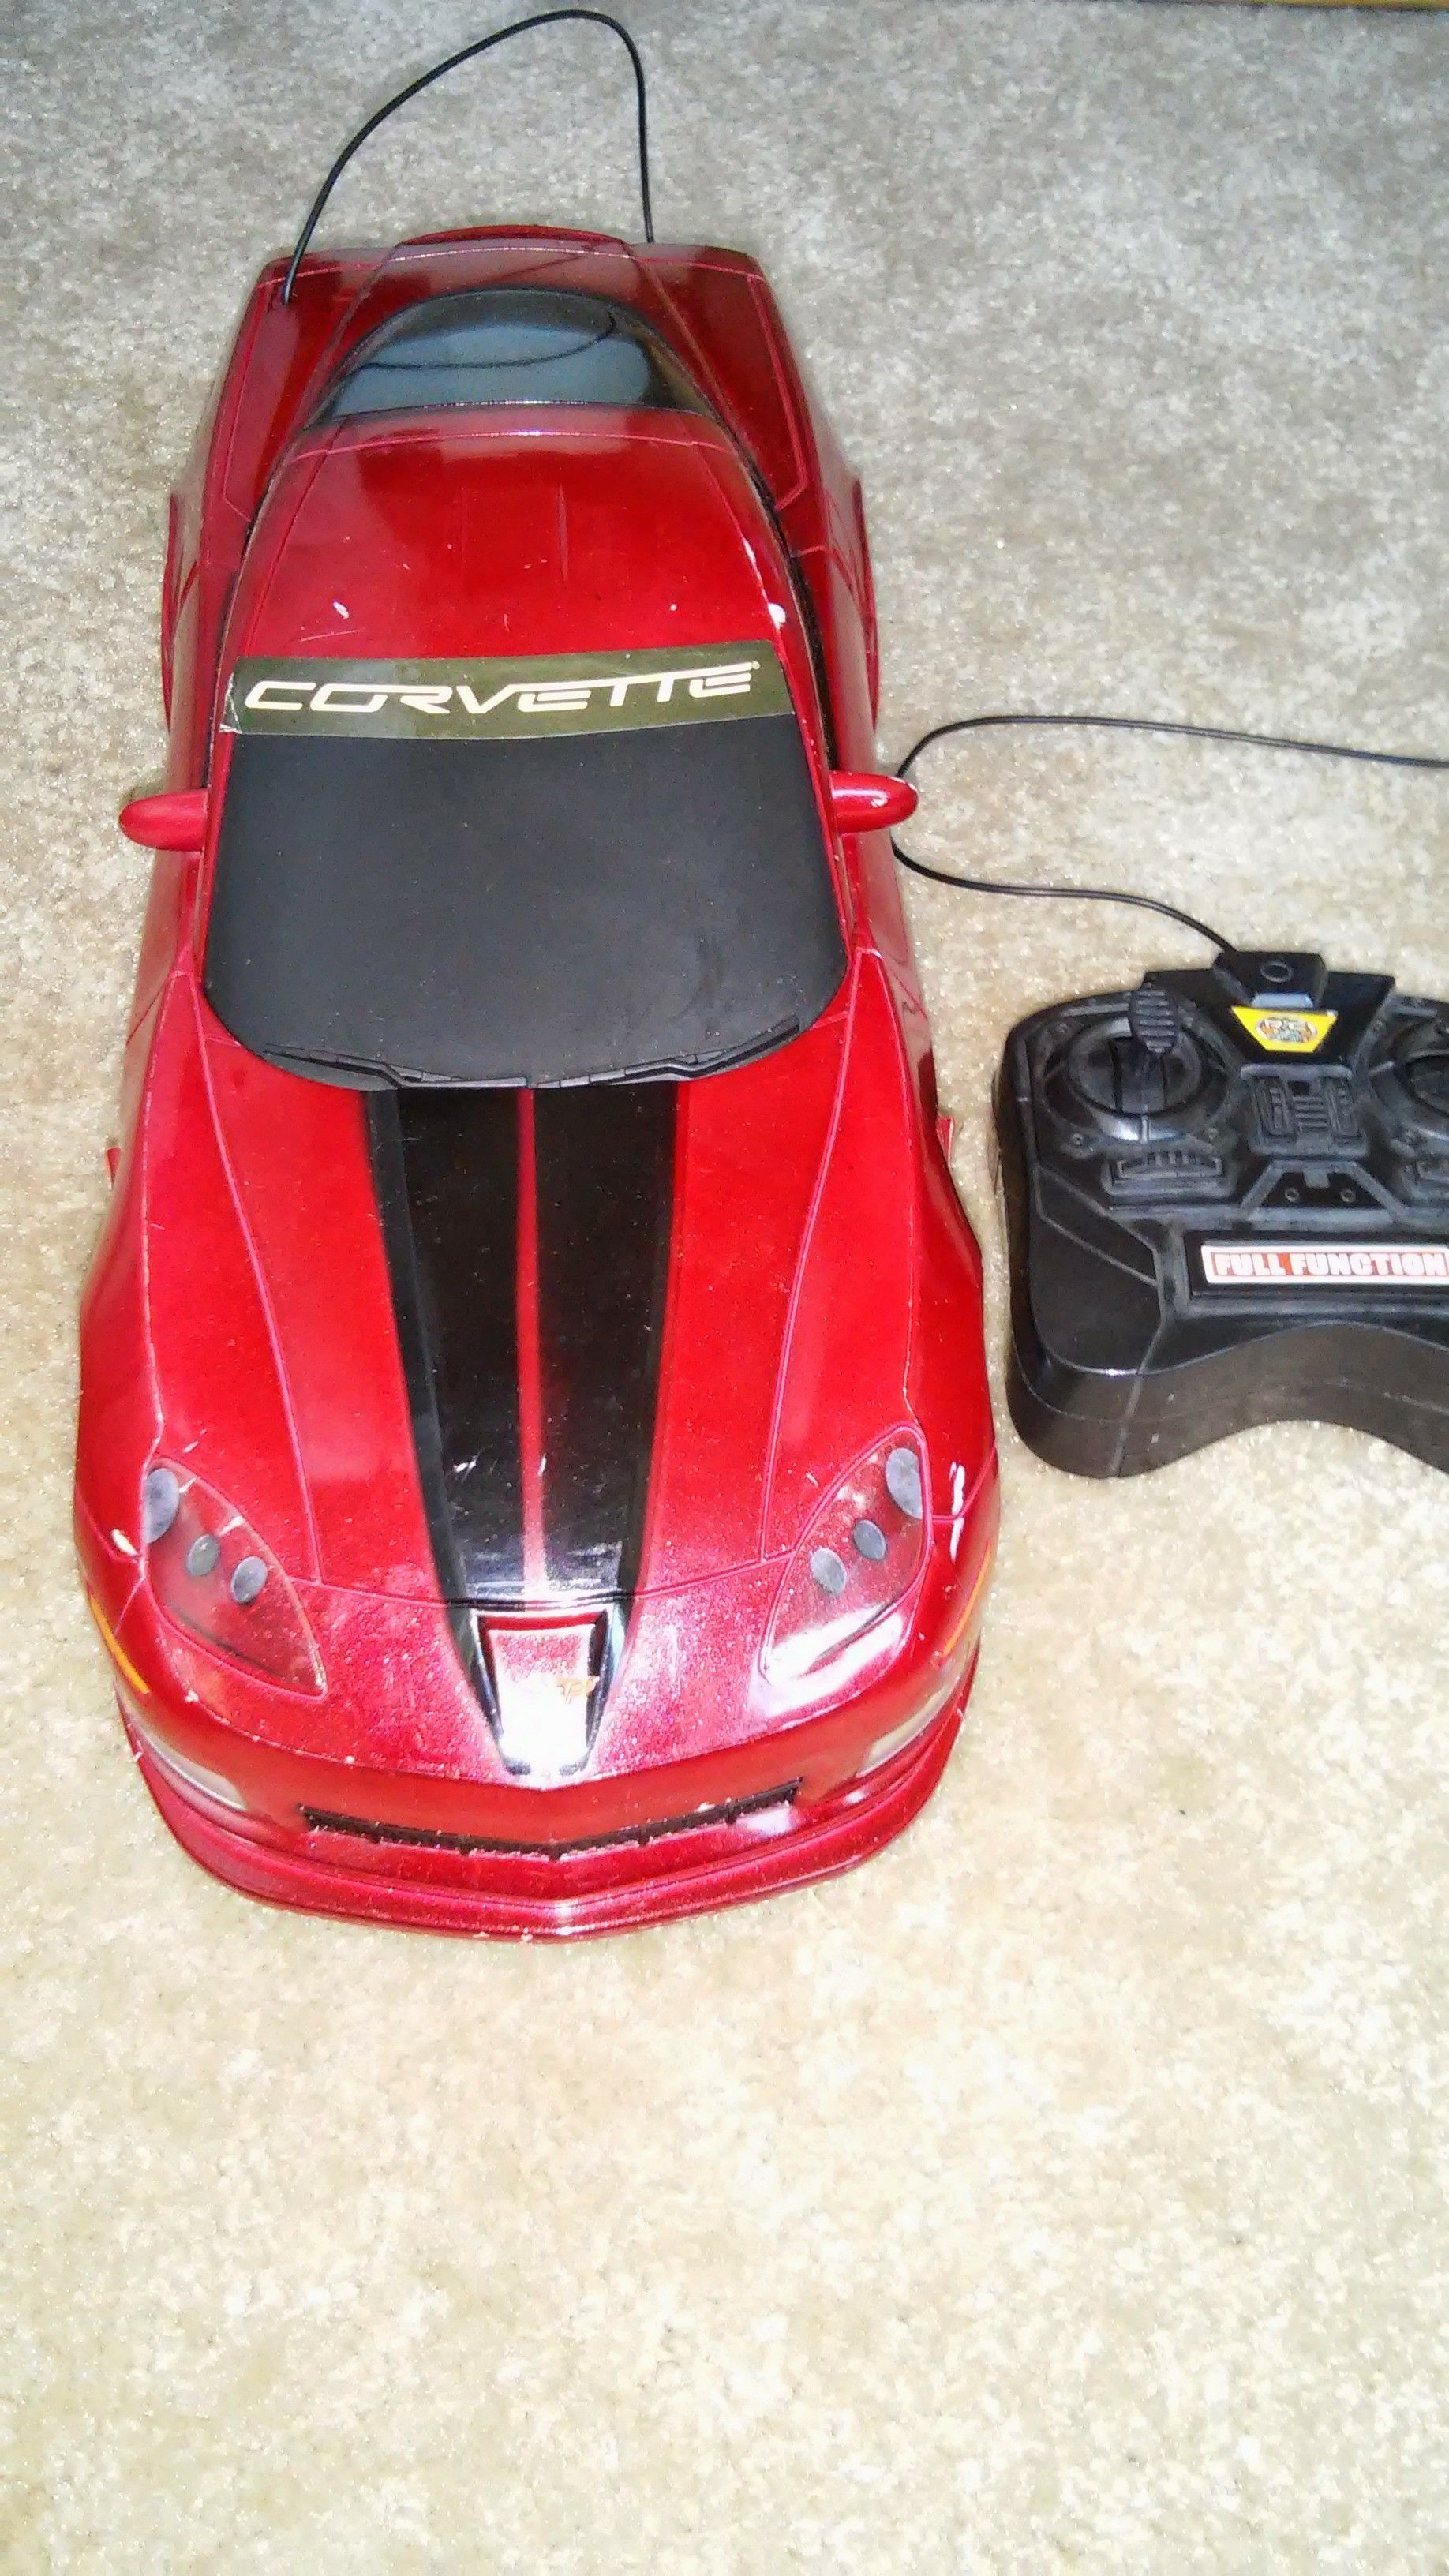 2009 GM Corvette Z06 remote control car 49MhZ